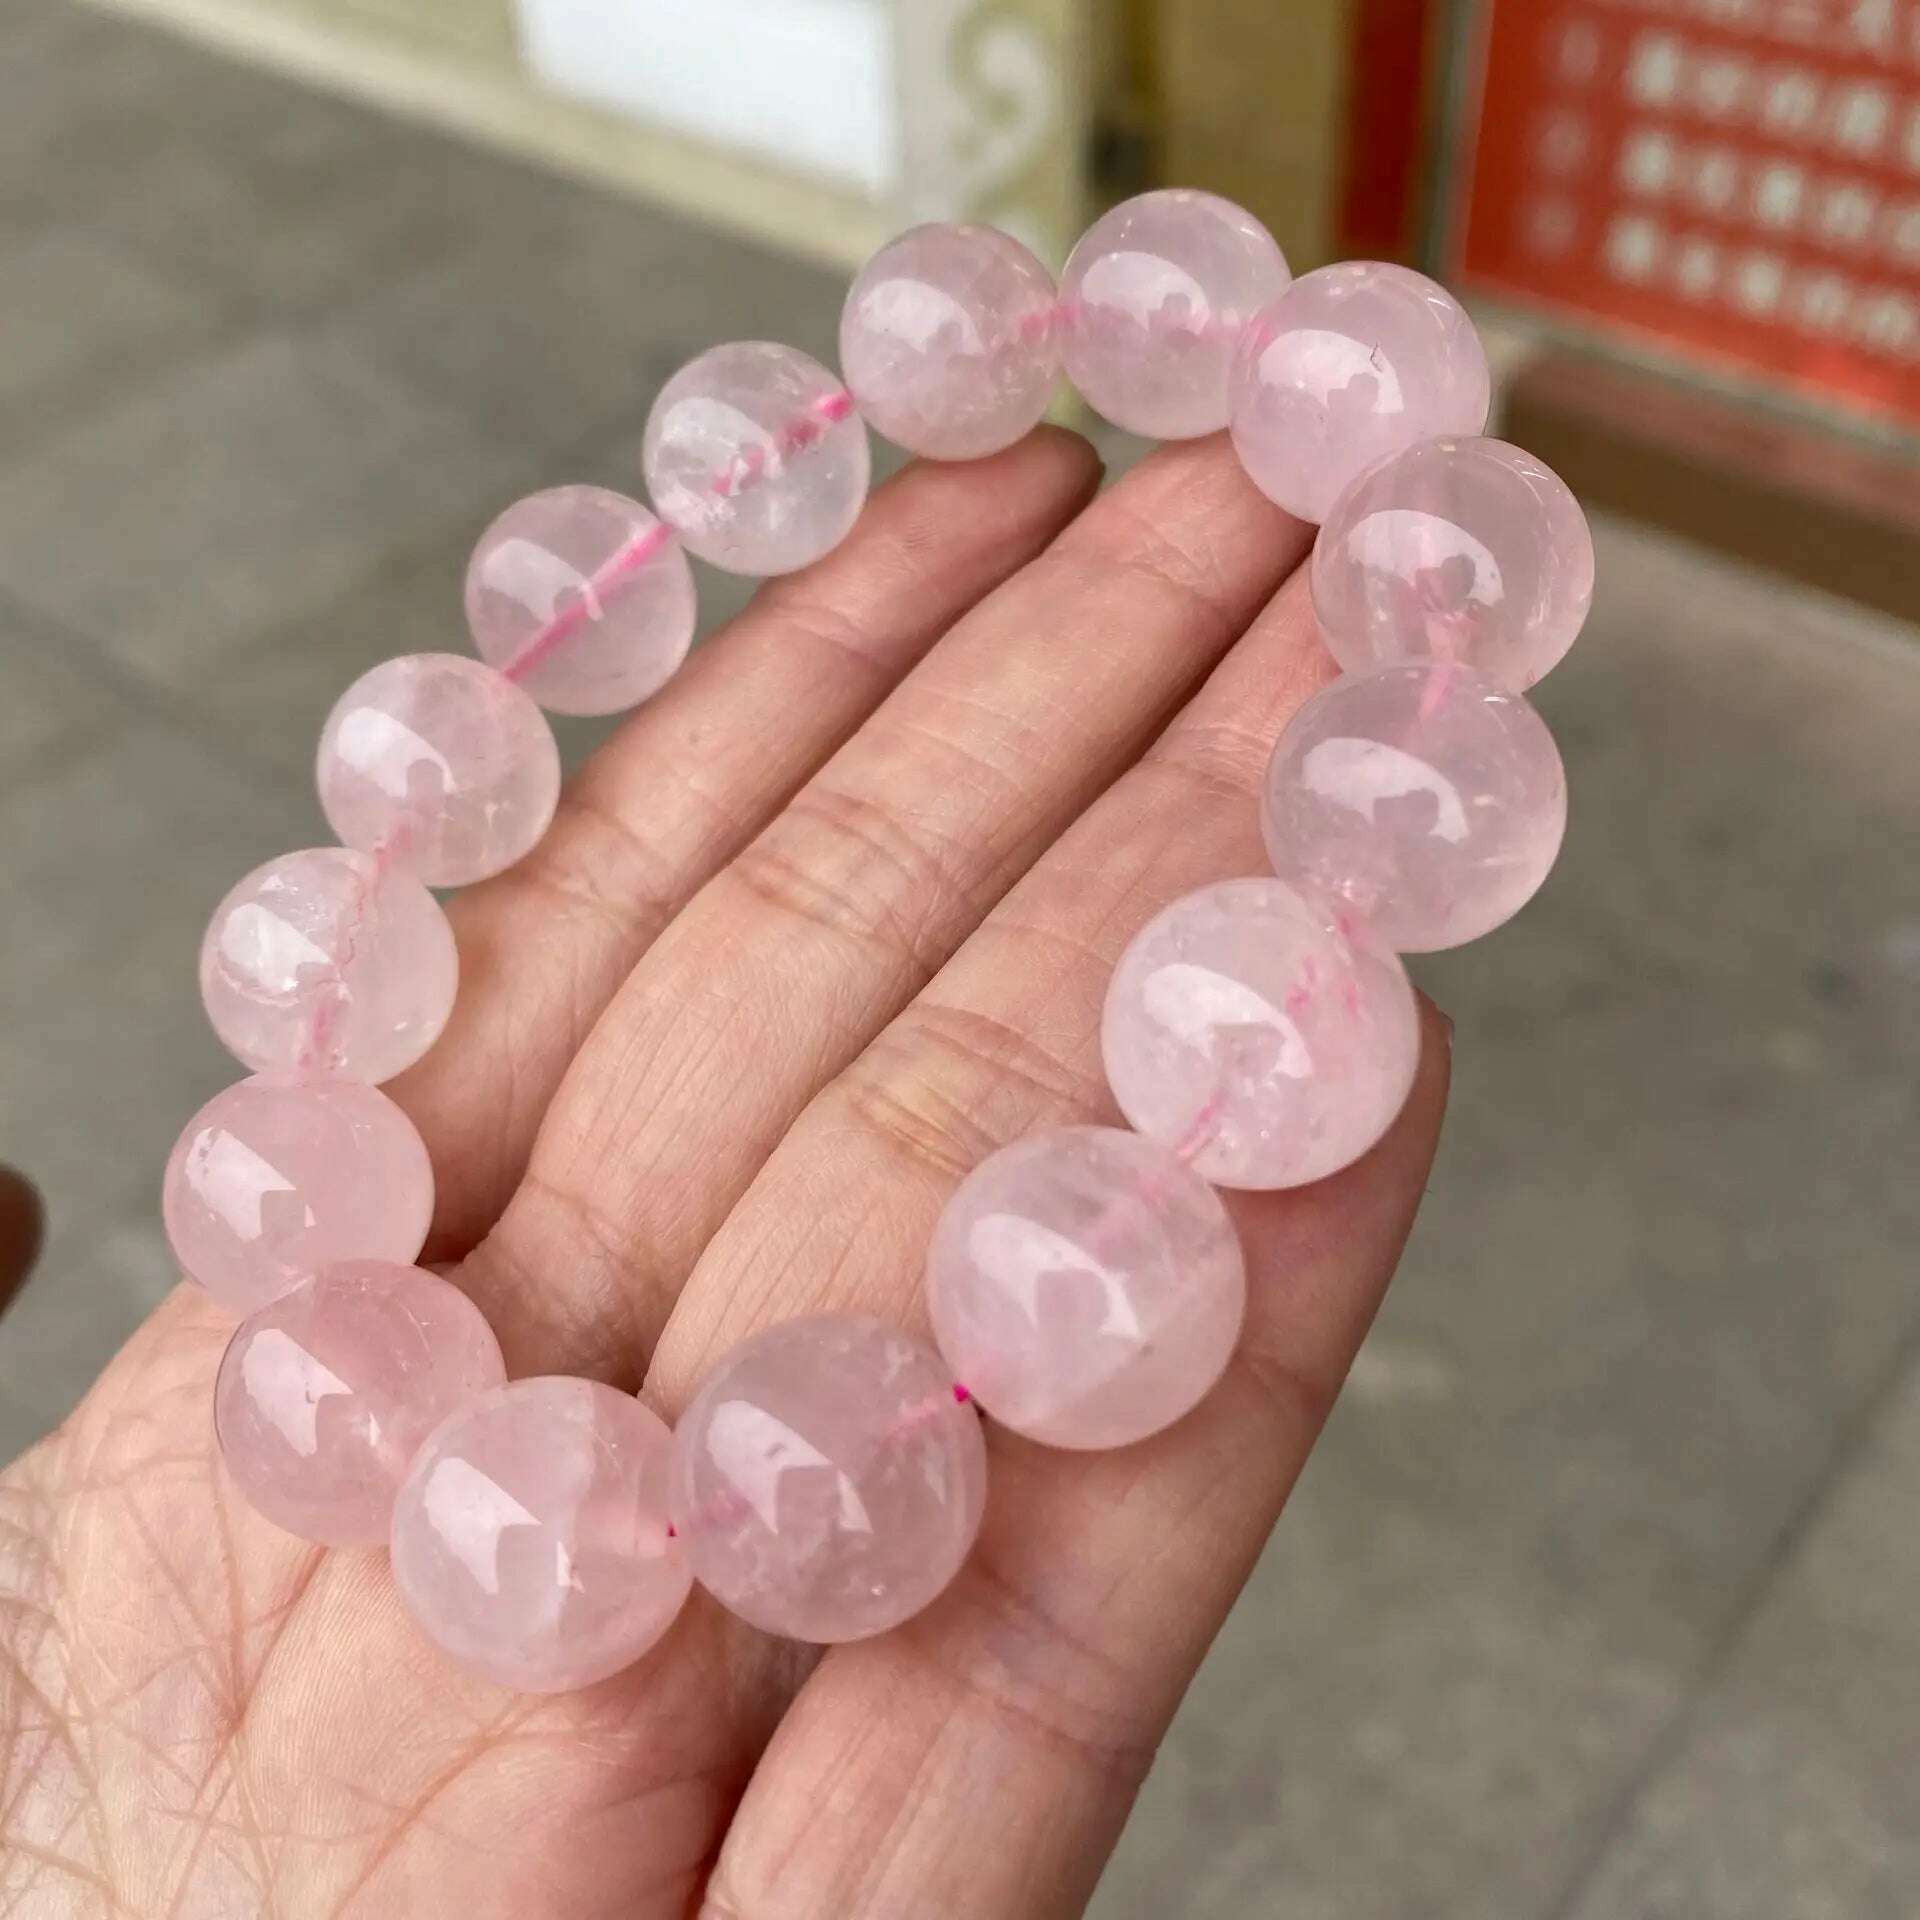 KIMLUD, Wholesale Natural Stone Pink Rose Quartz Beads Bracelet For Women Men Fashion Healing Crystal Yoga Jewelry Gift, KIMLUD Women's Clothes